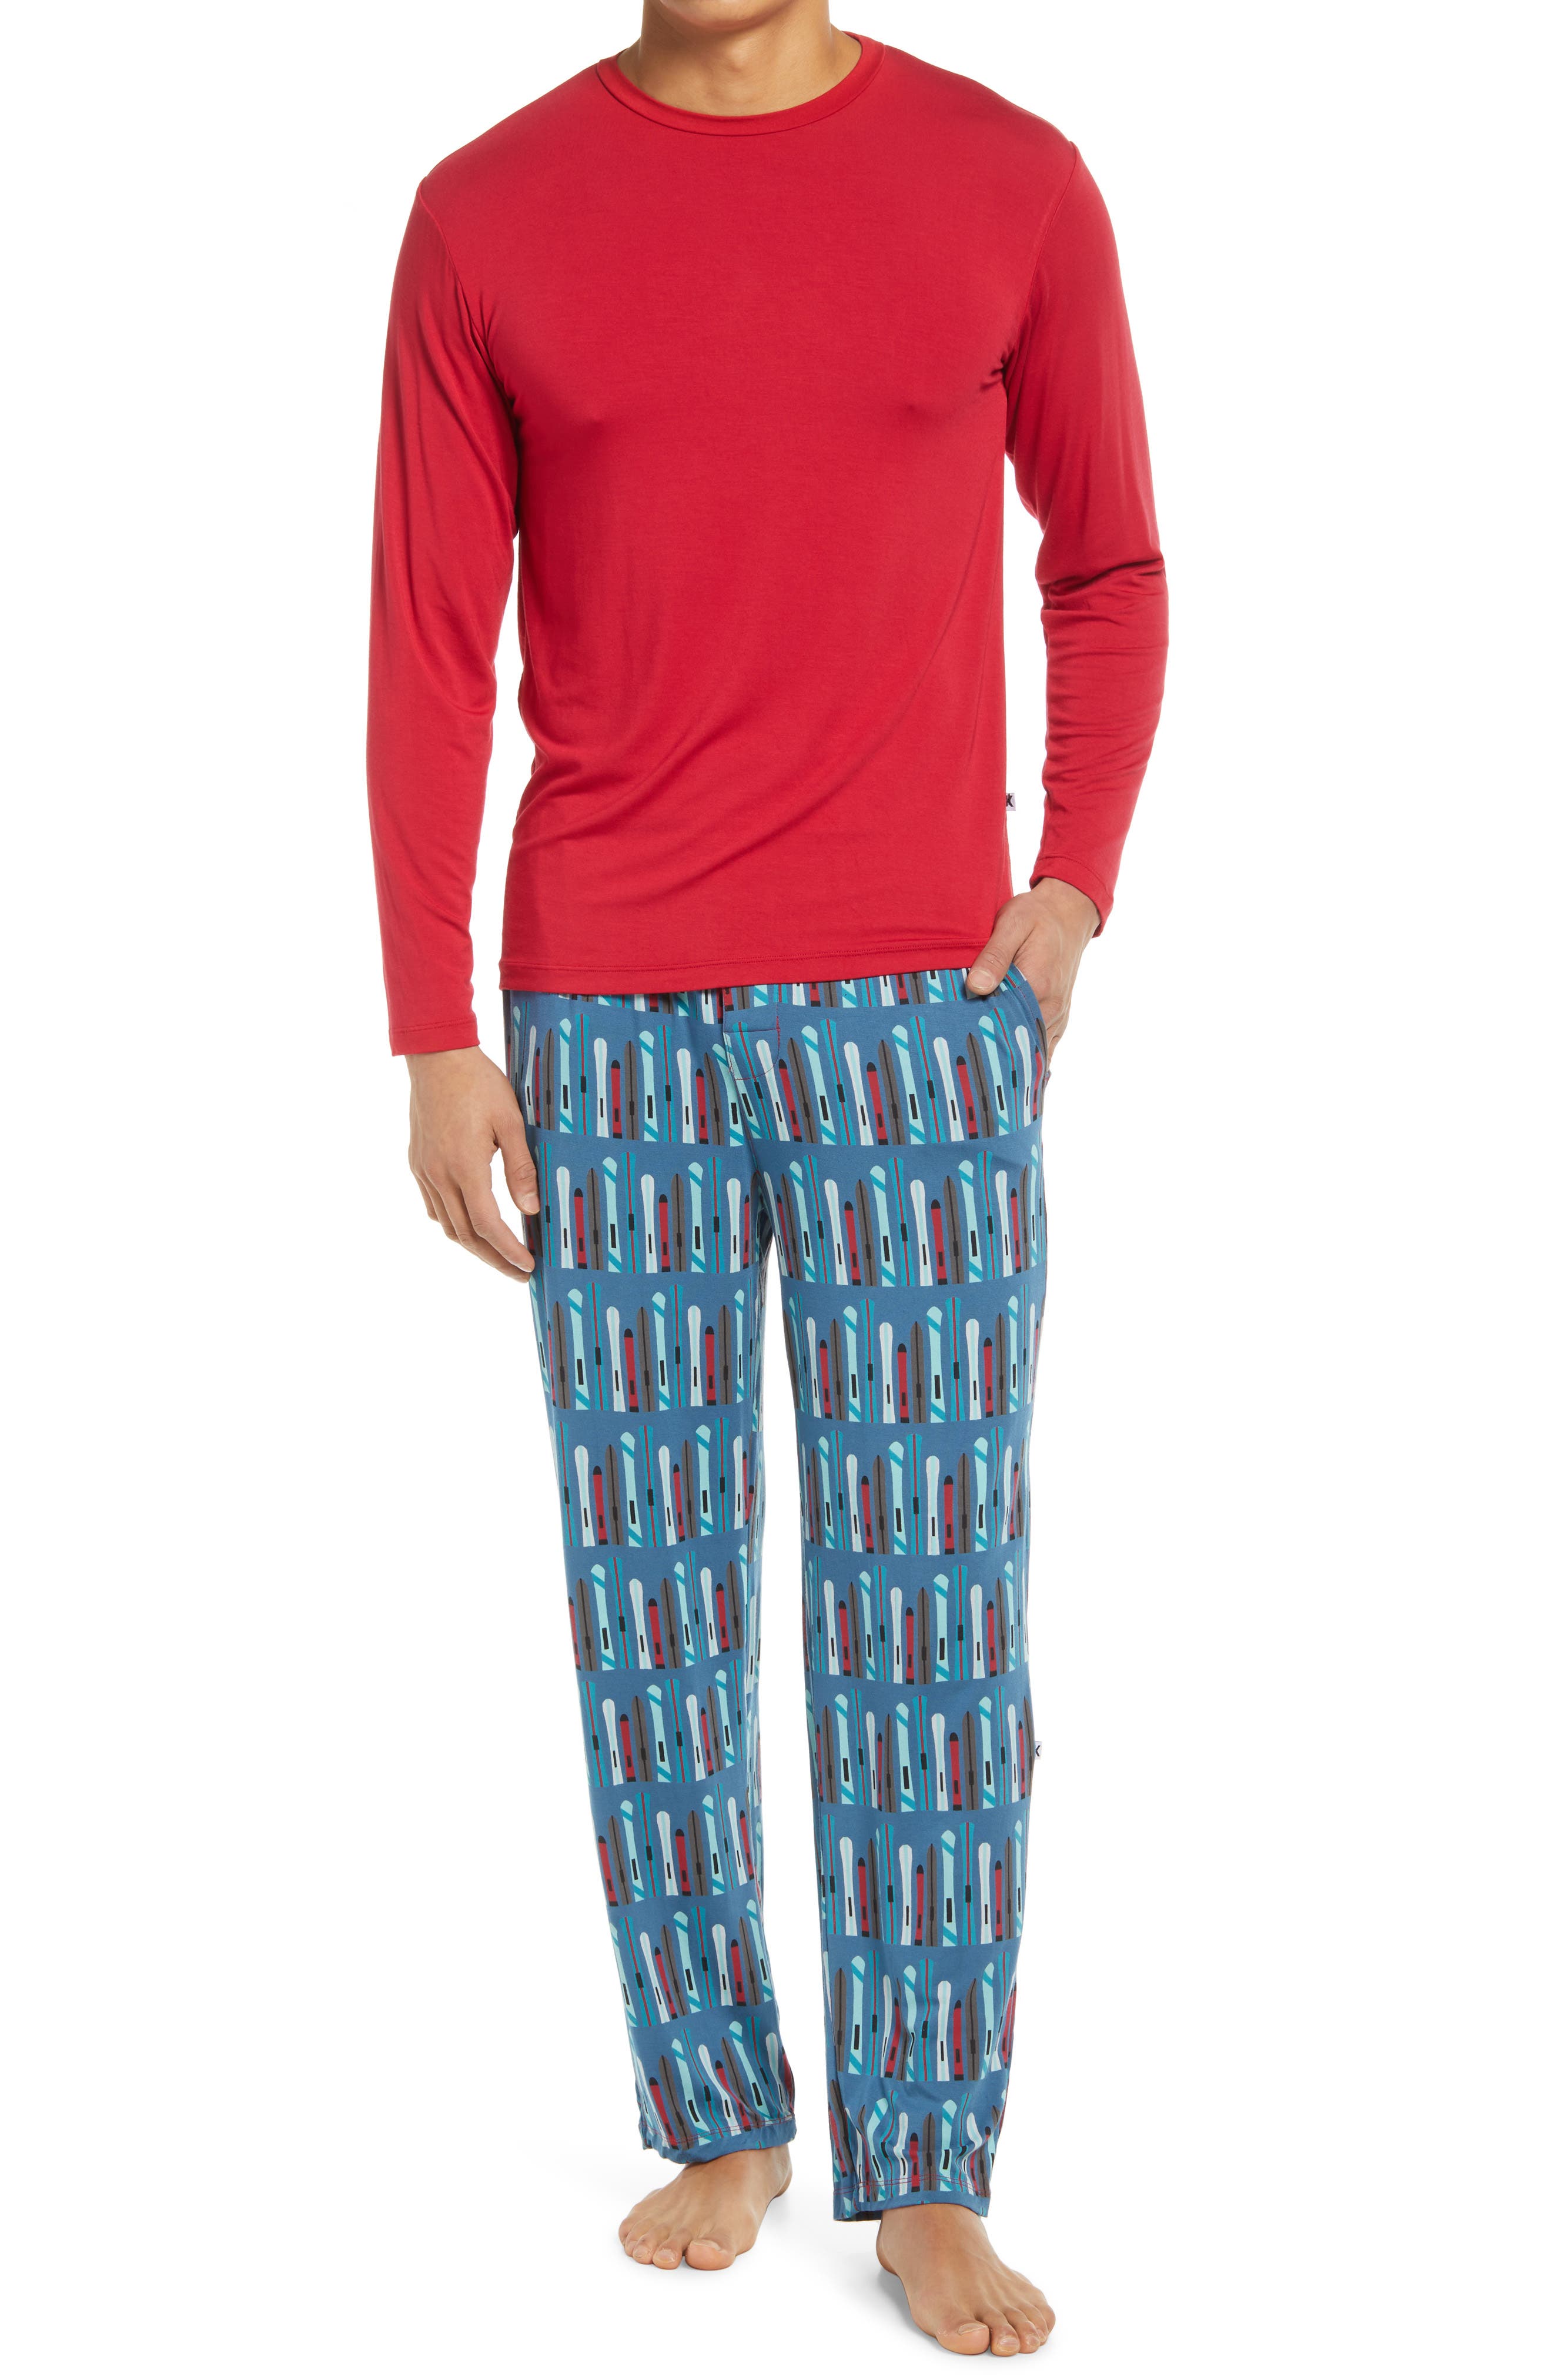 KicKee Pants Ski Print Pajamas in Twilight Skis at Nordstrom